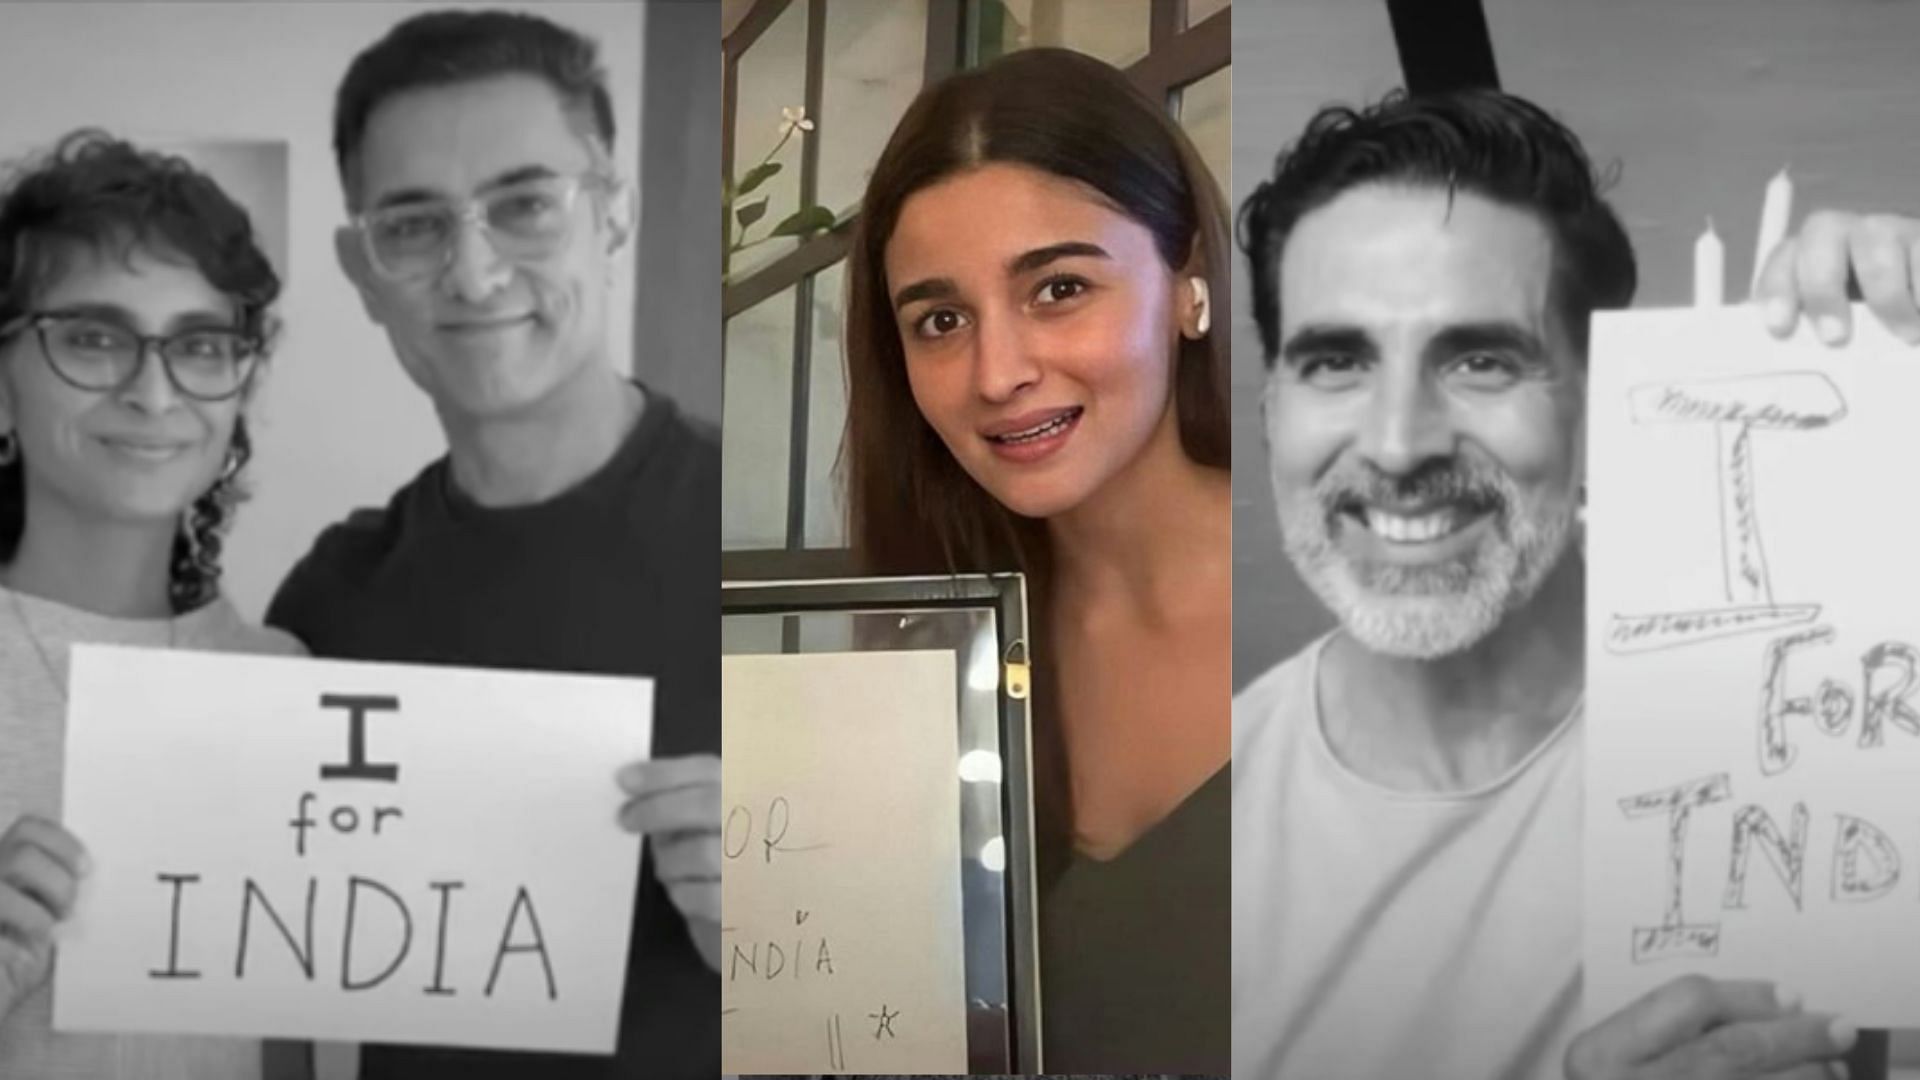 Kiran Rao, Aamir Khan, Alia Bhatt and Akshay Kumar support the ‘I for India’ initiative.